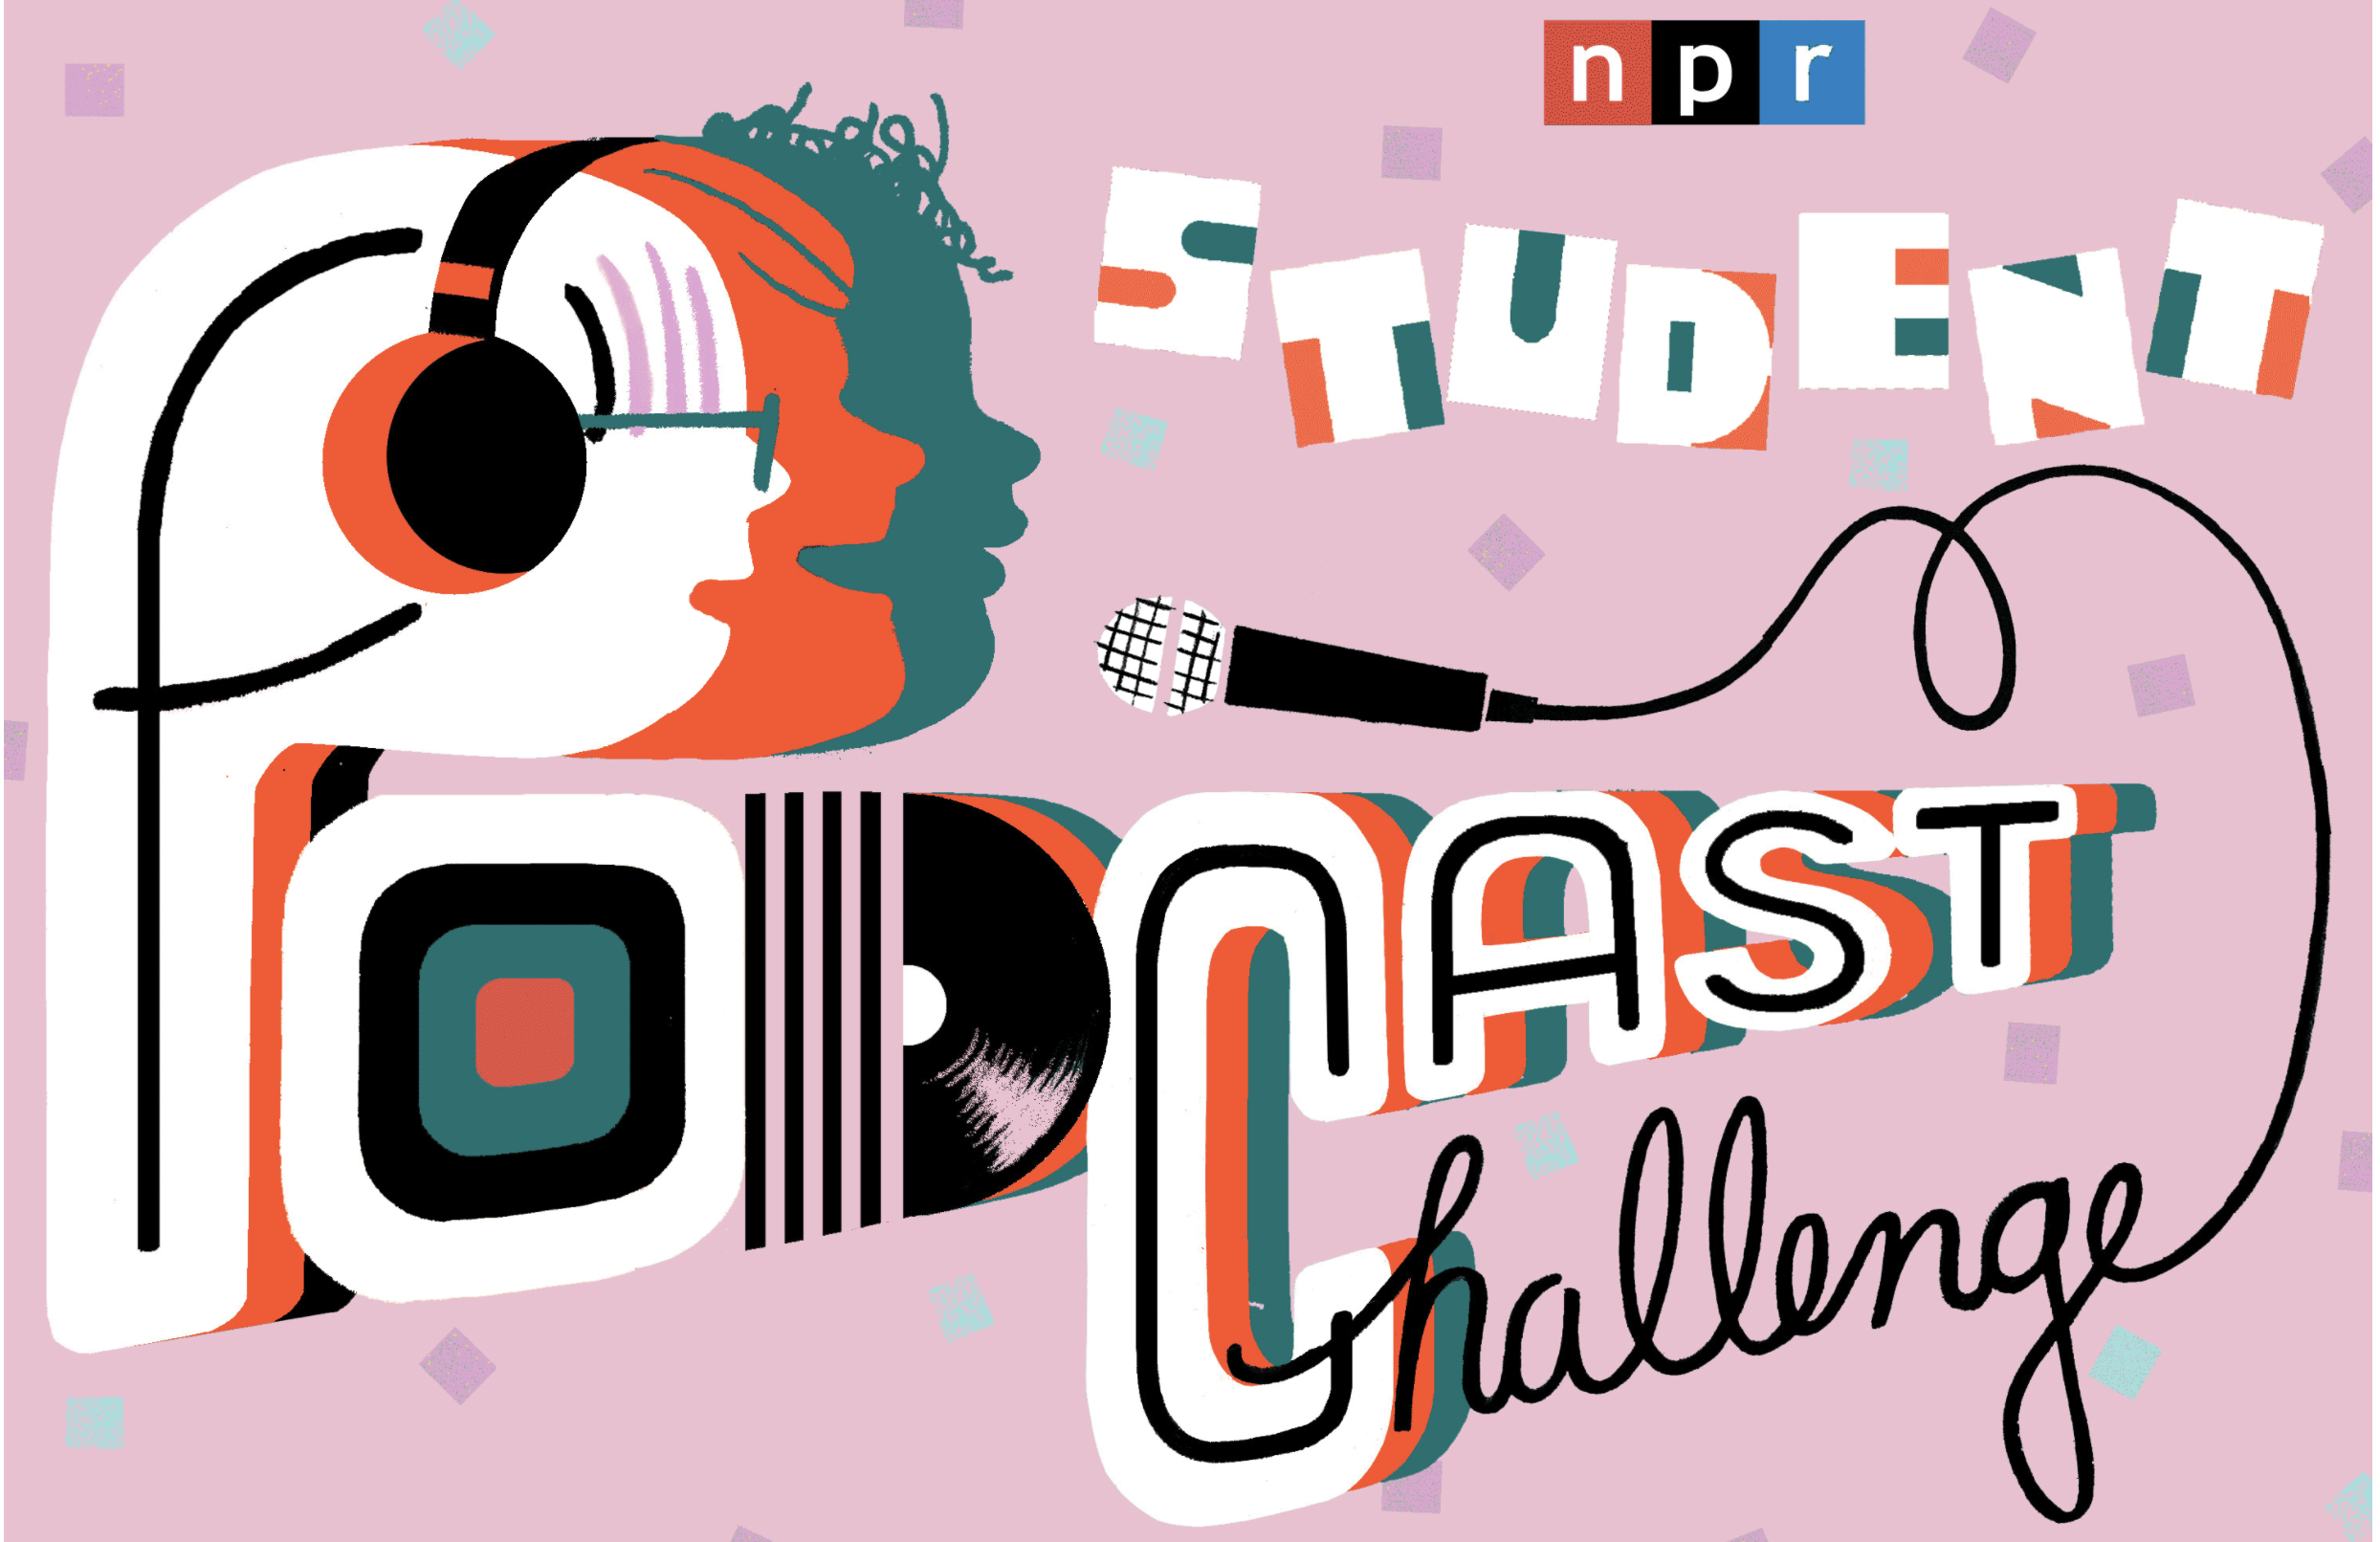 NPR student podcast challenge